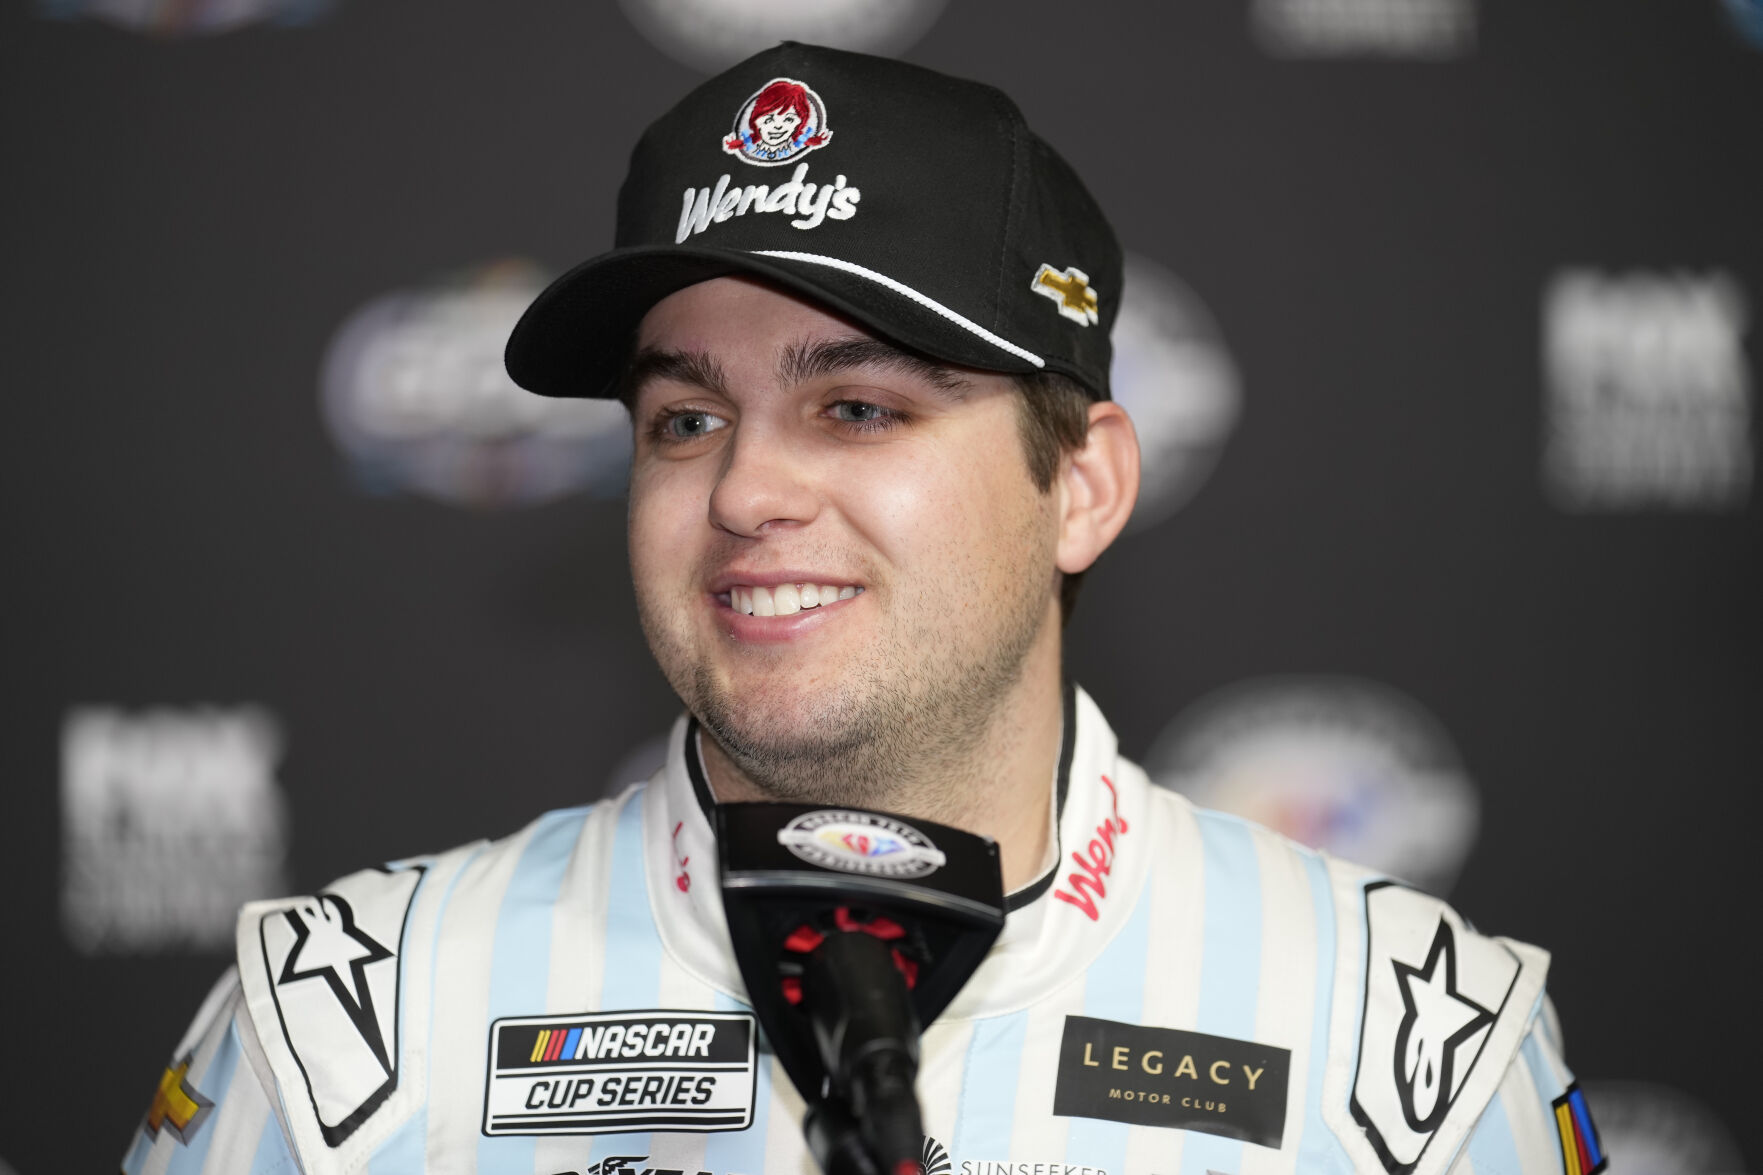 Noah Gragson seeking breakthrough in NASCAR Cup Series at Enjoy Illinois 300